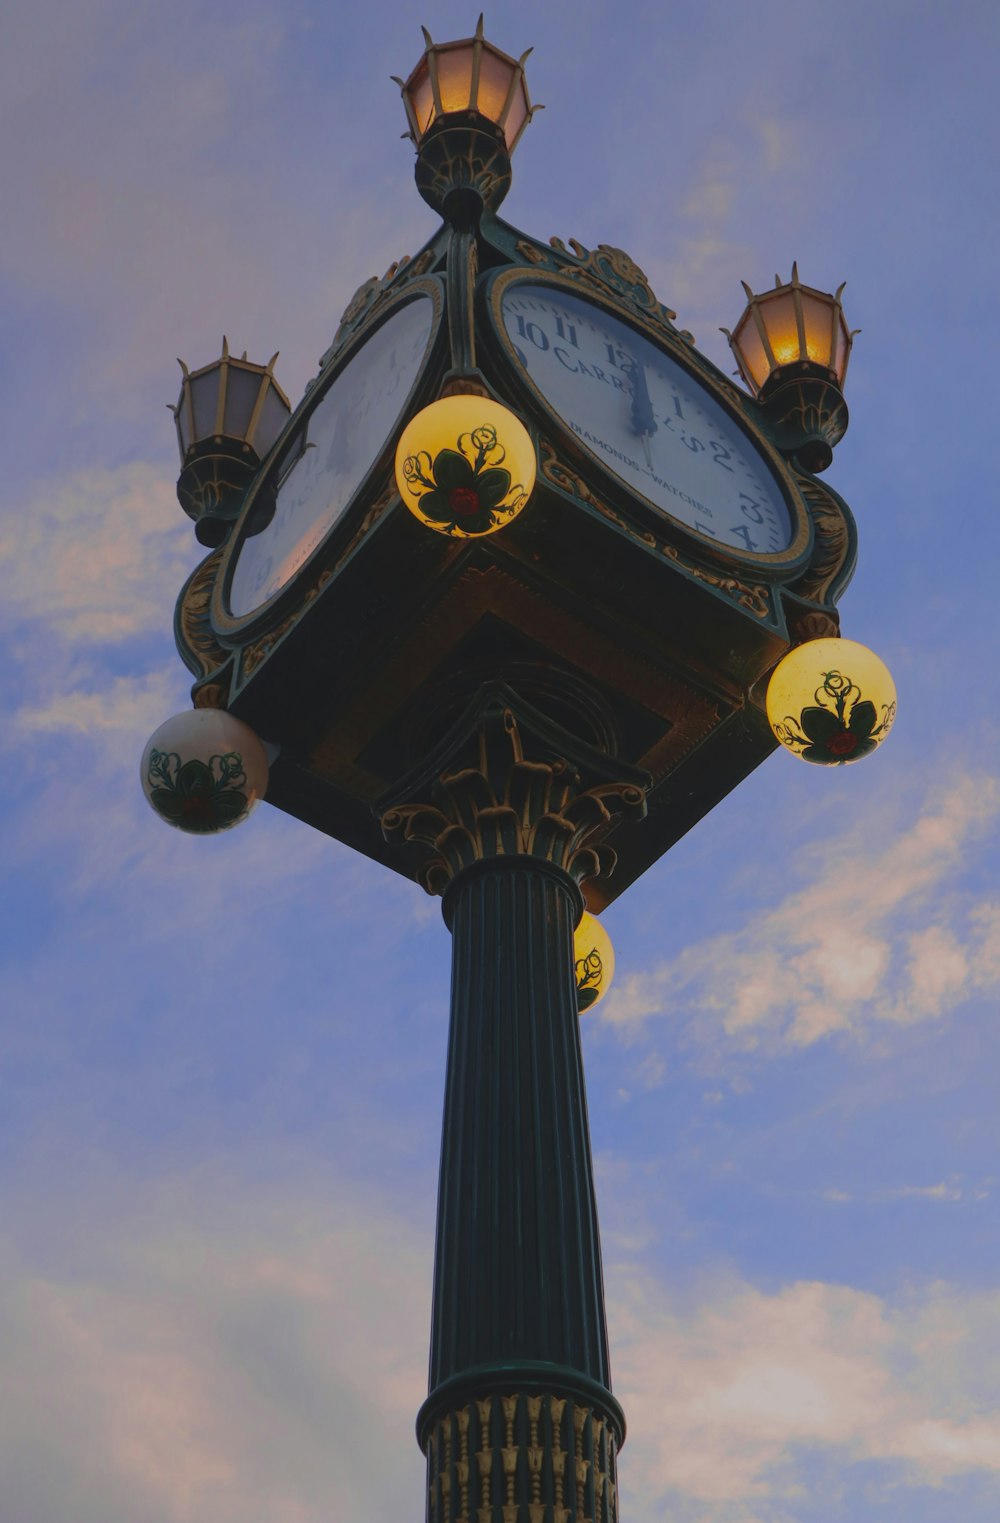 Un orologio su un palo con un cielo sullo sfondo